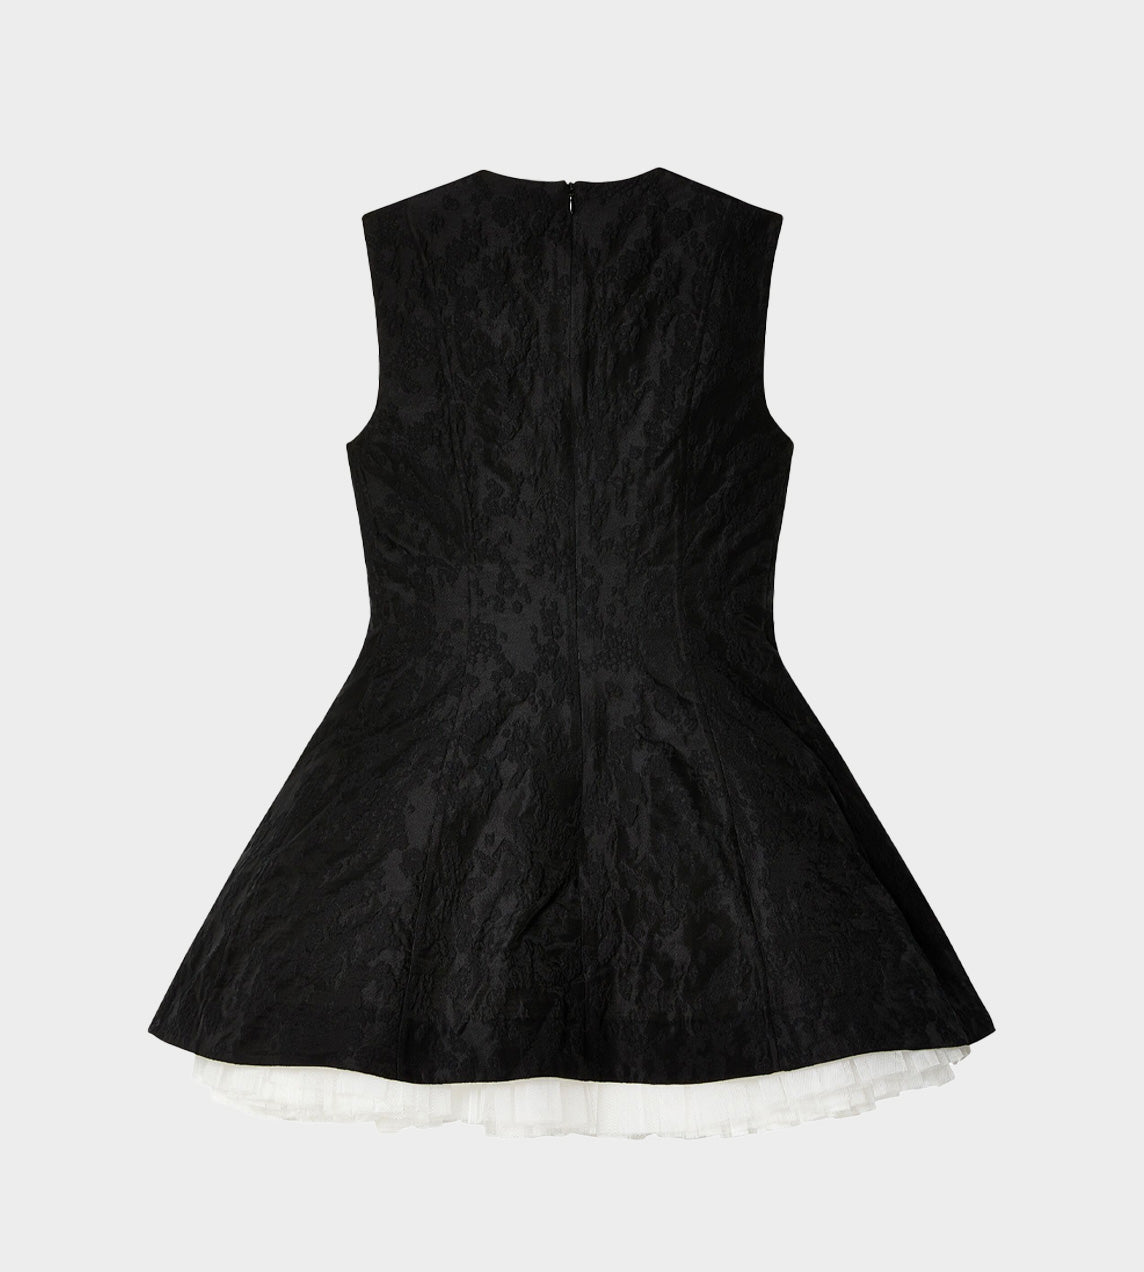 ShuShu/Tong - Puffy Sleeveless Dress Black